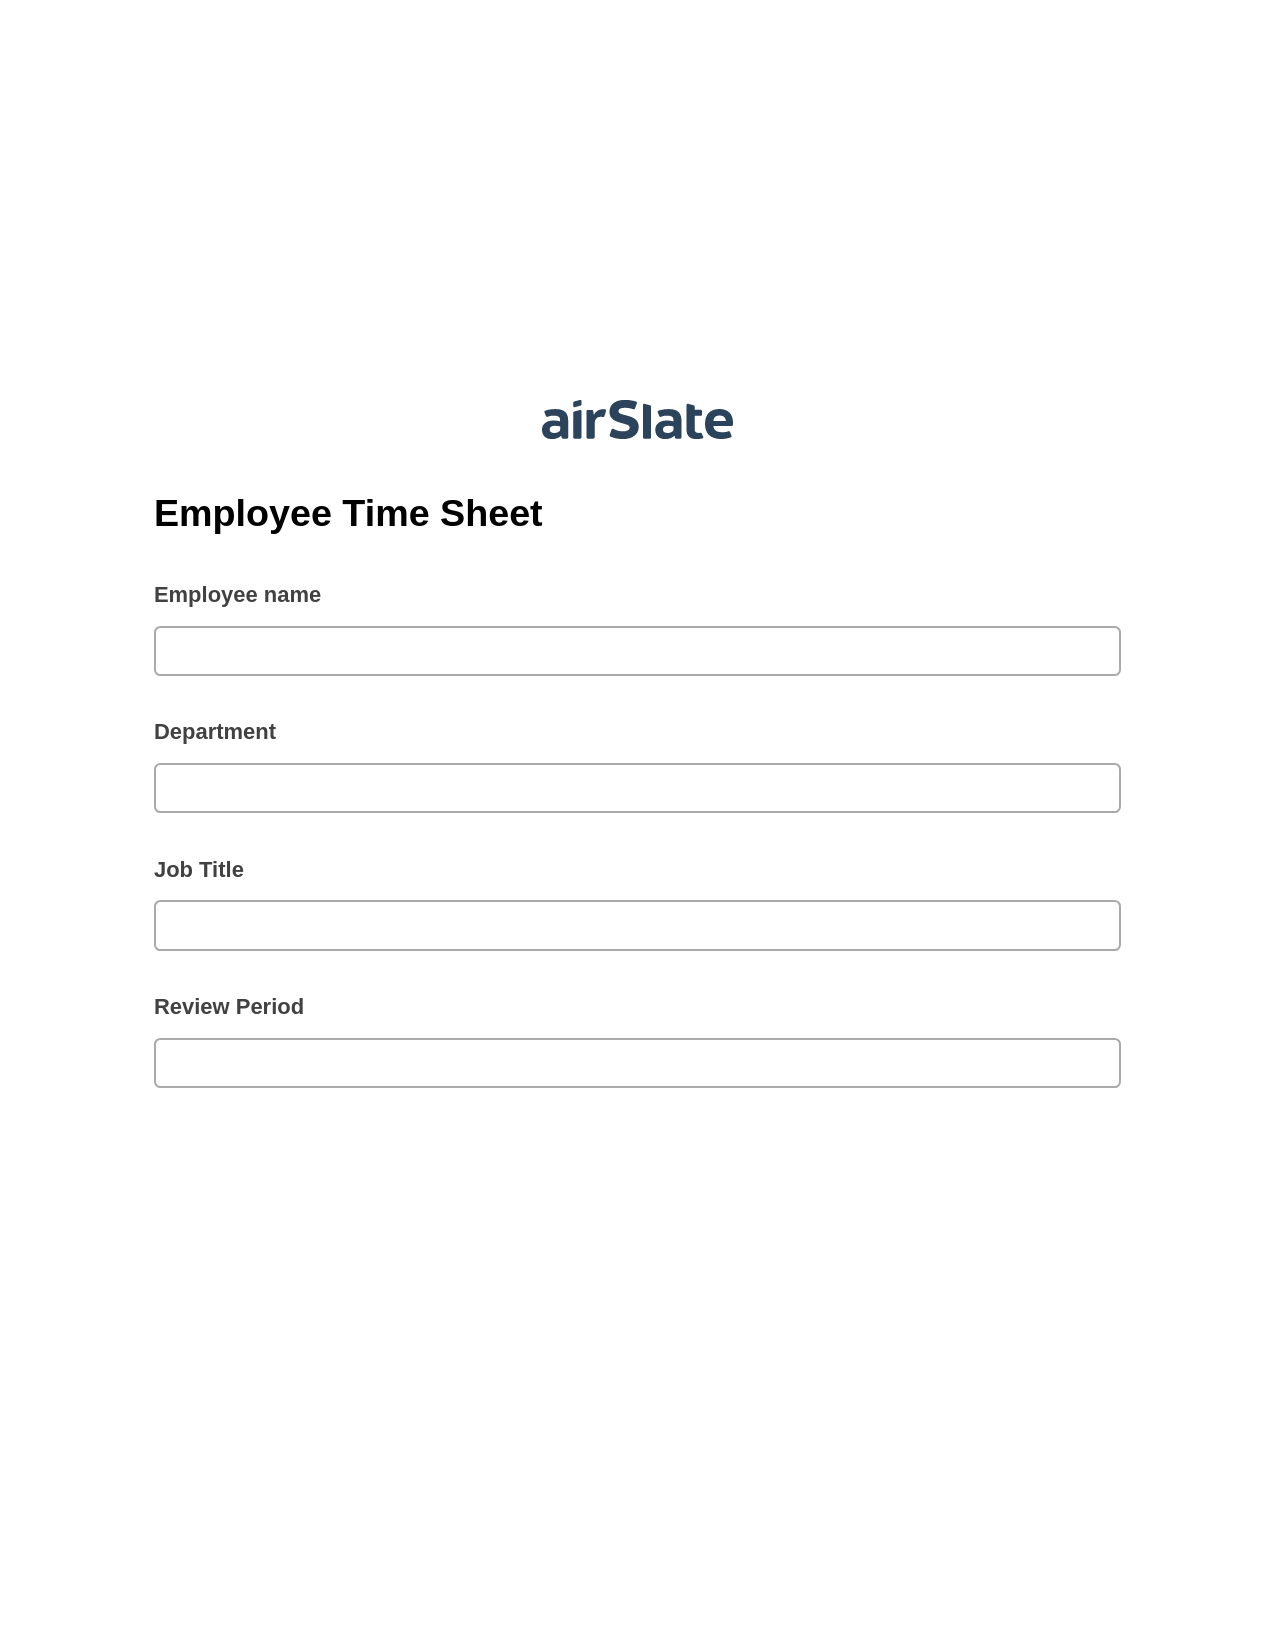 Multirole Employee Time Sheet Pre-fill from Litmos bot, Update Audit Trail Bot, Archive to SharePoint Folder Bot